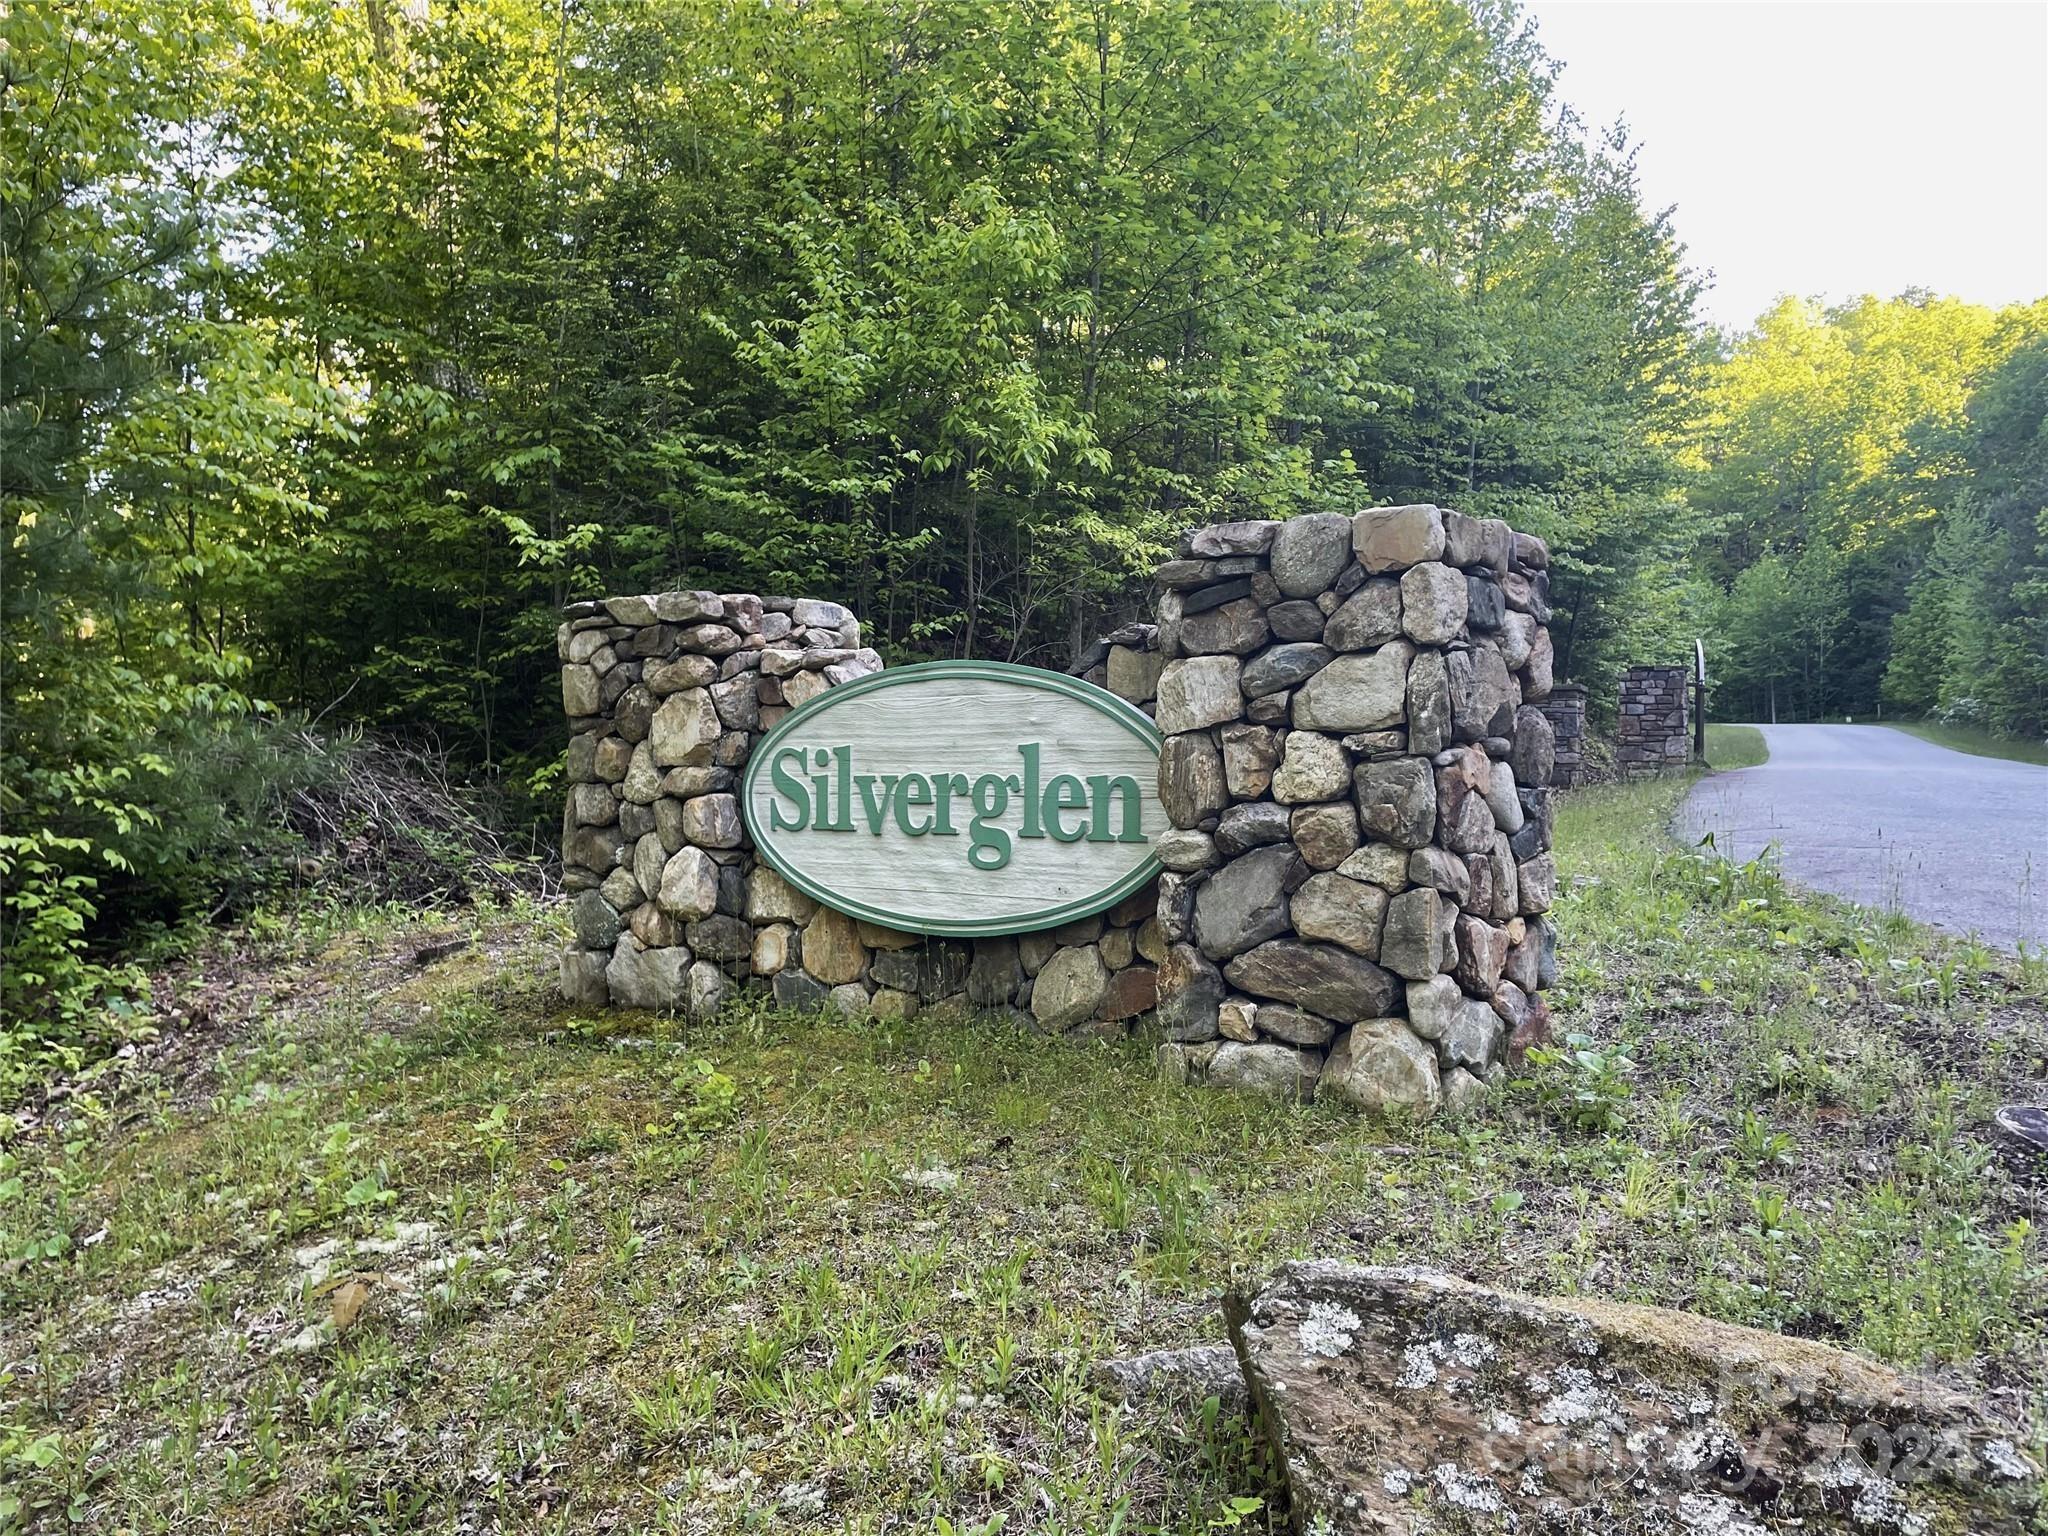 Property Image for 000 Silverglen Way 75